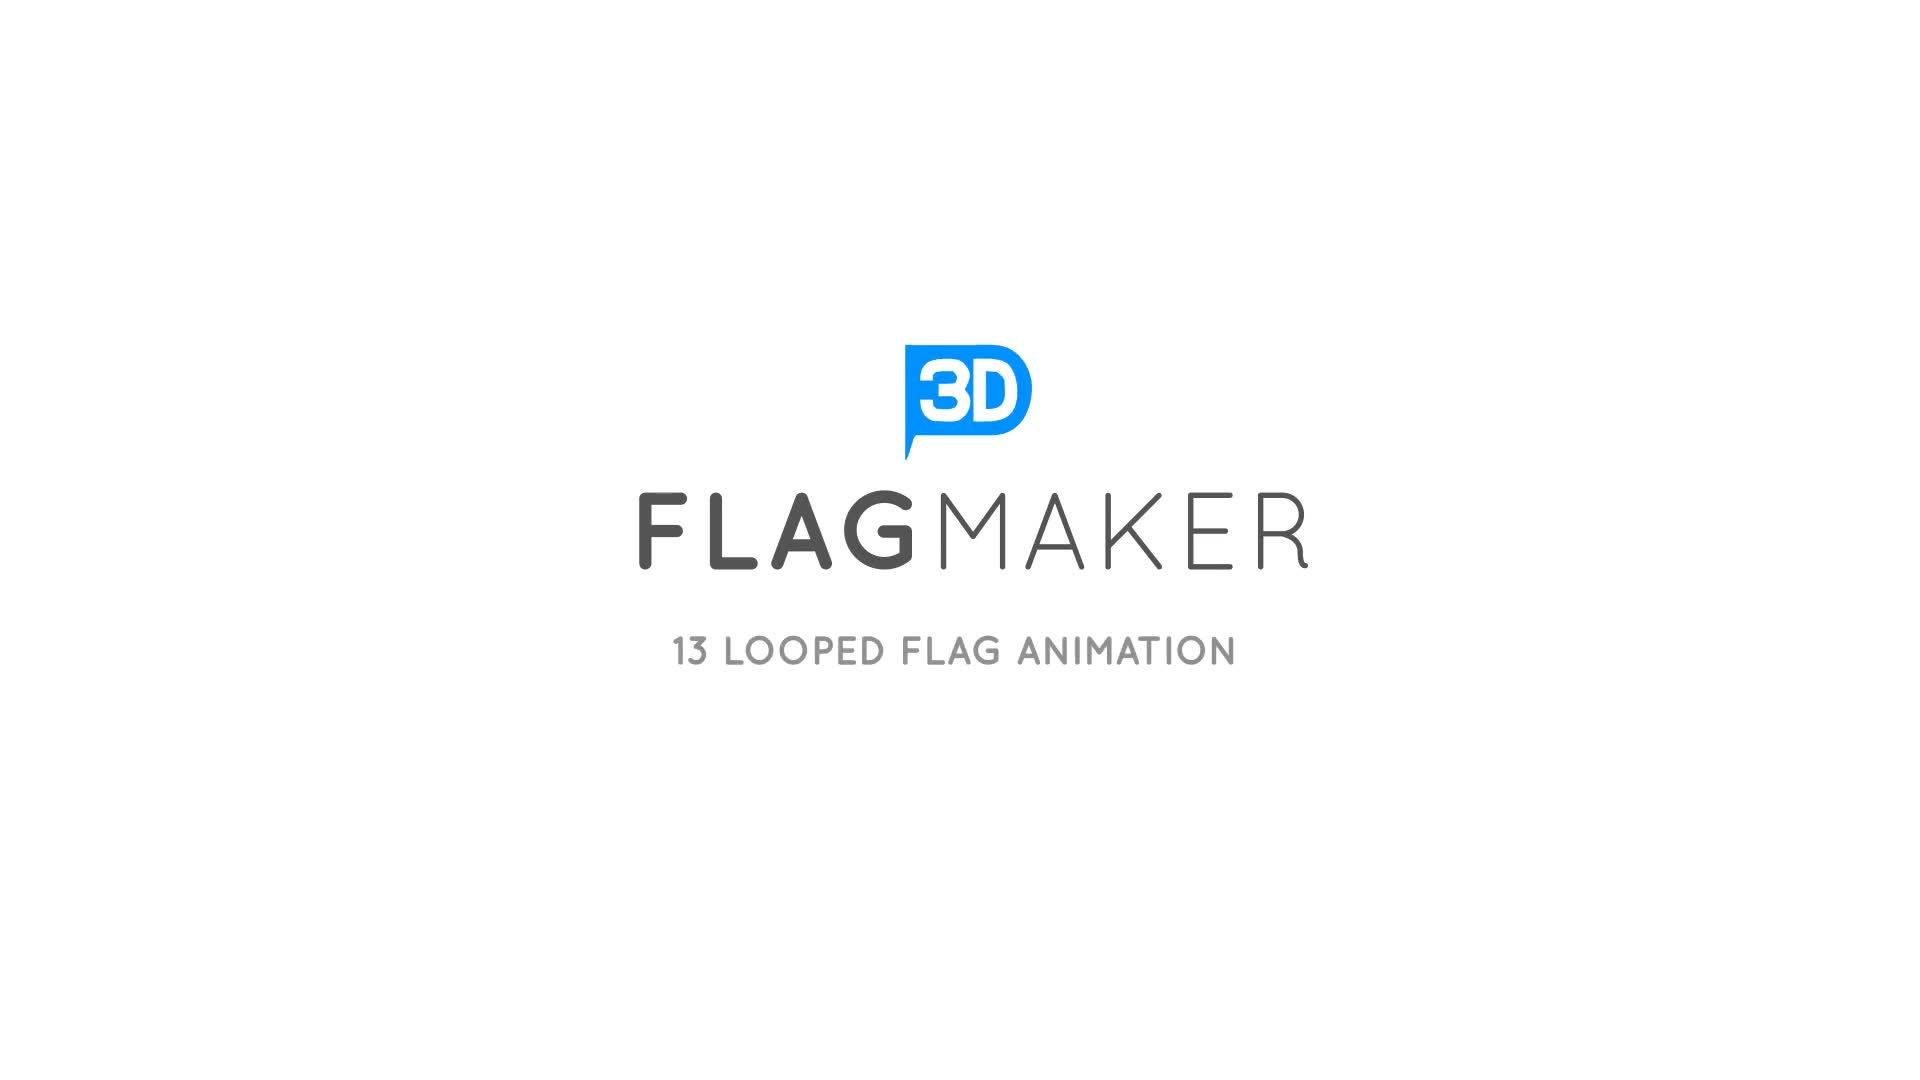 Flag Maker - Download Videohive 22663338